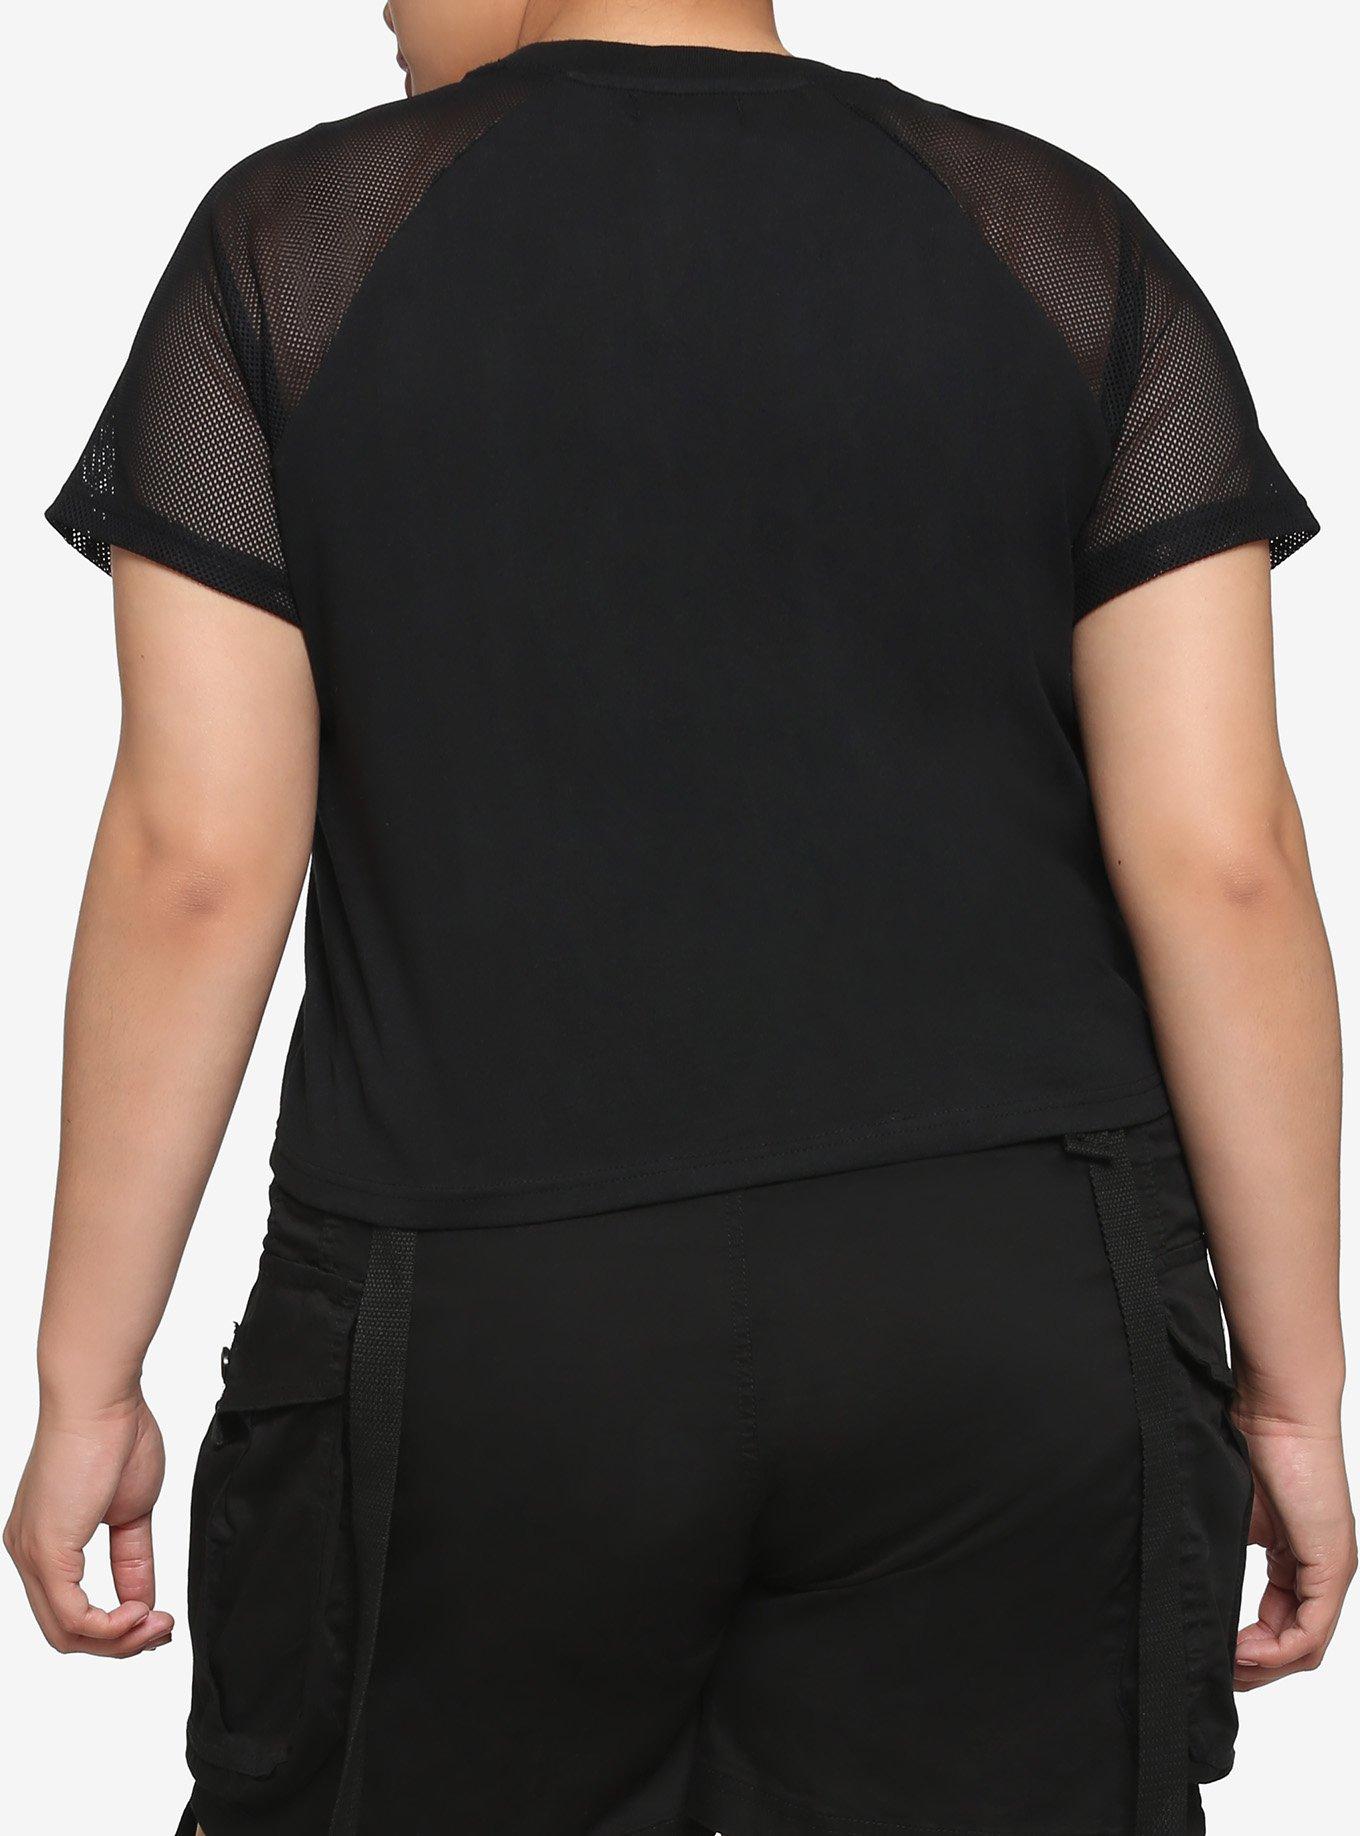 Black Mesh Sleeve Girls Raglan Top Plus Size, BLACK, alternate